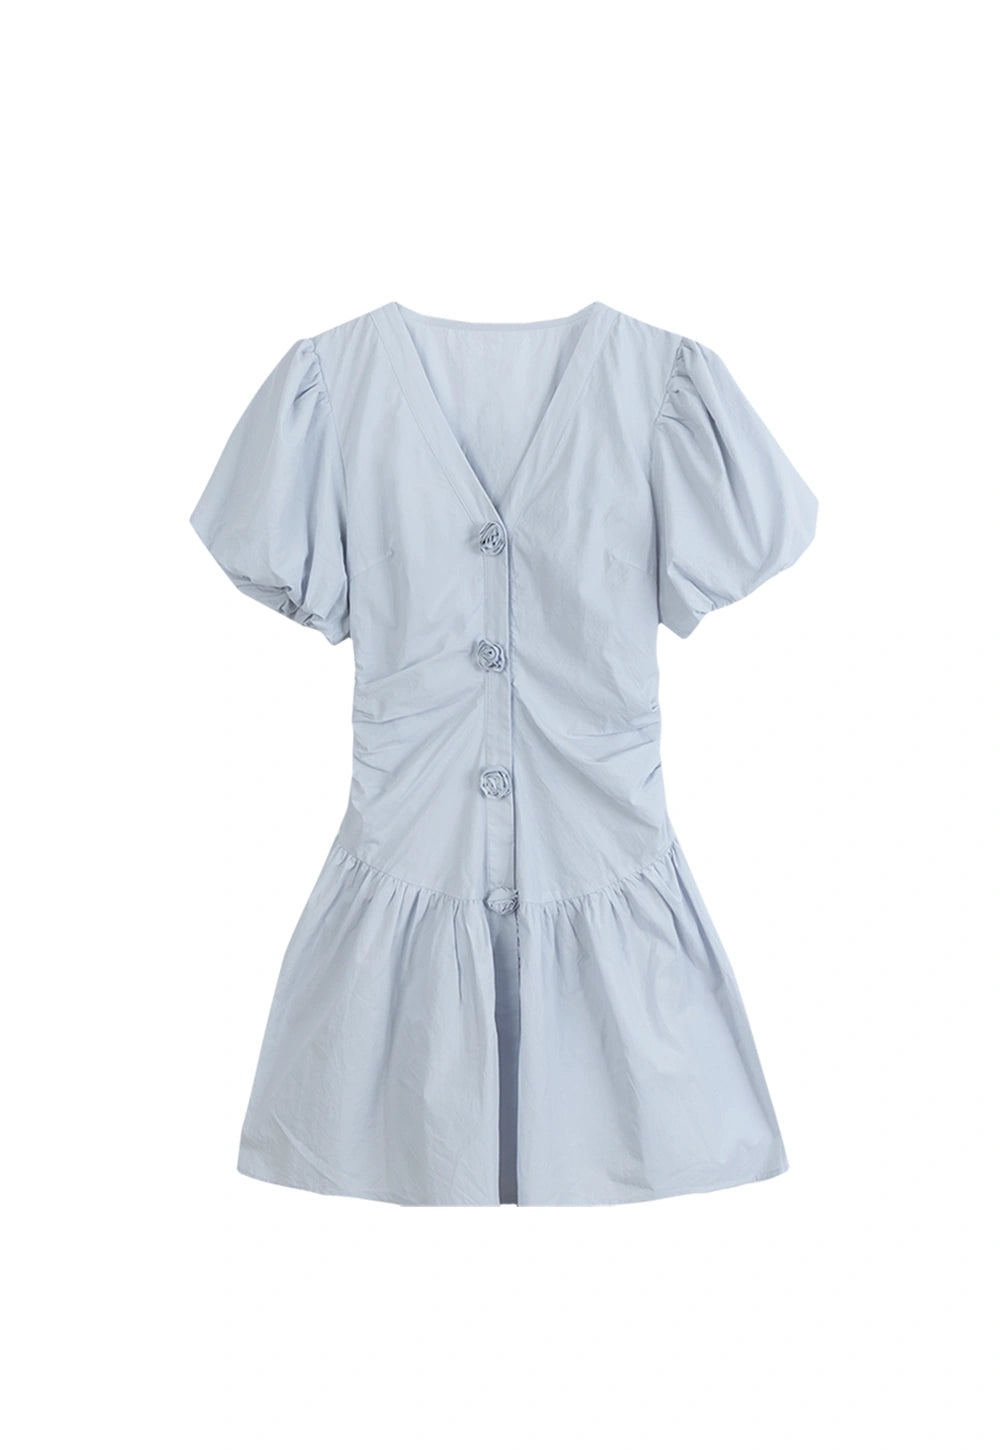 Women's Light Blue Cinched Waist Dress with Decorative Buttons - Short Sleeve, V-Neck